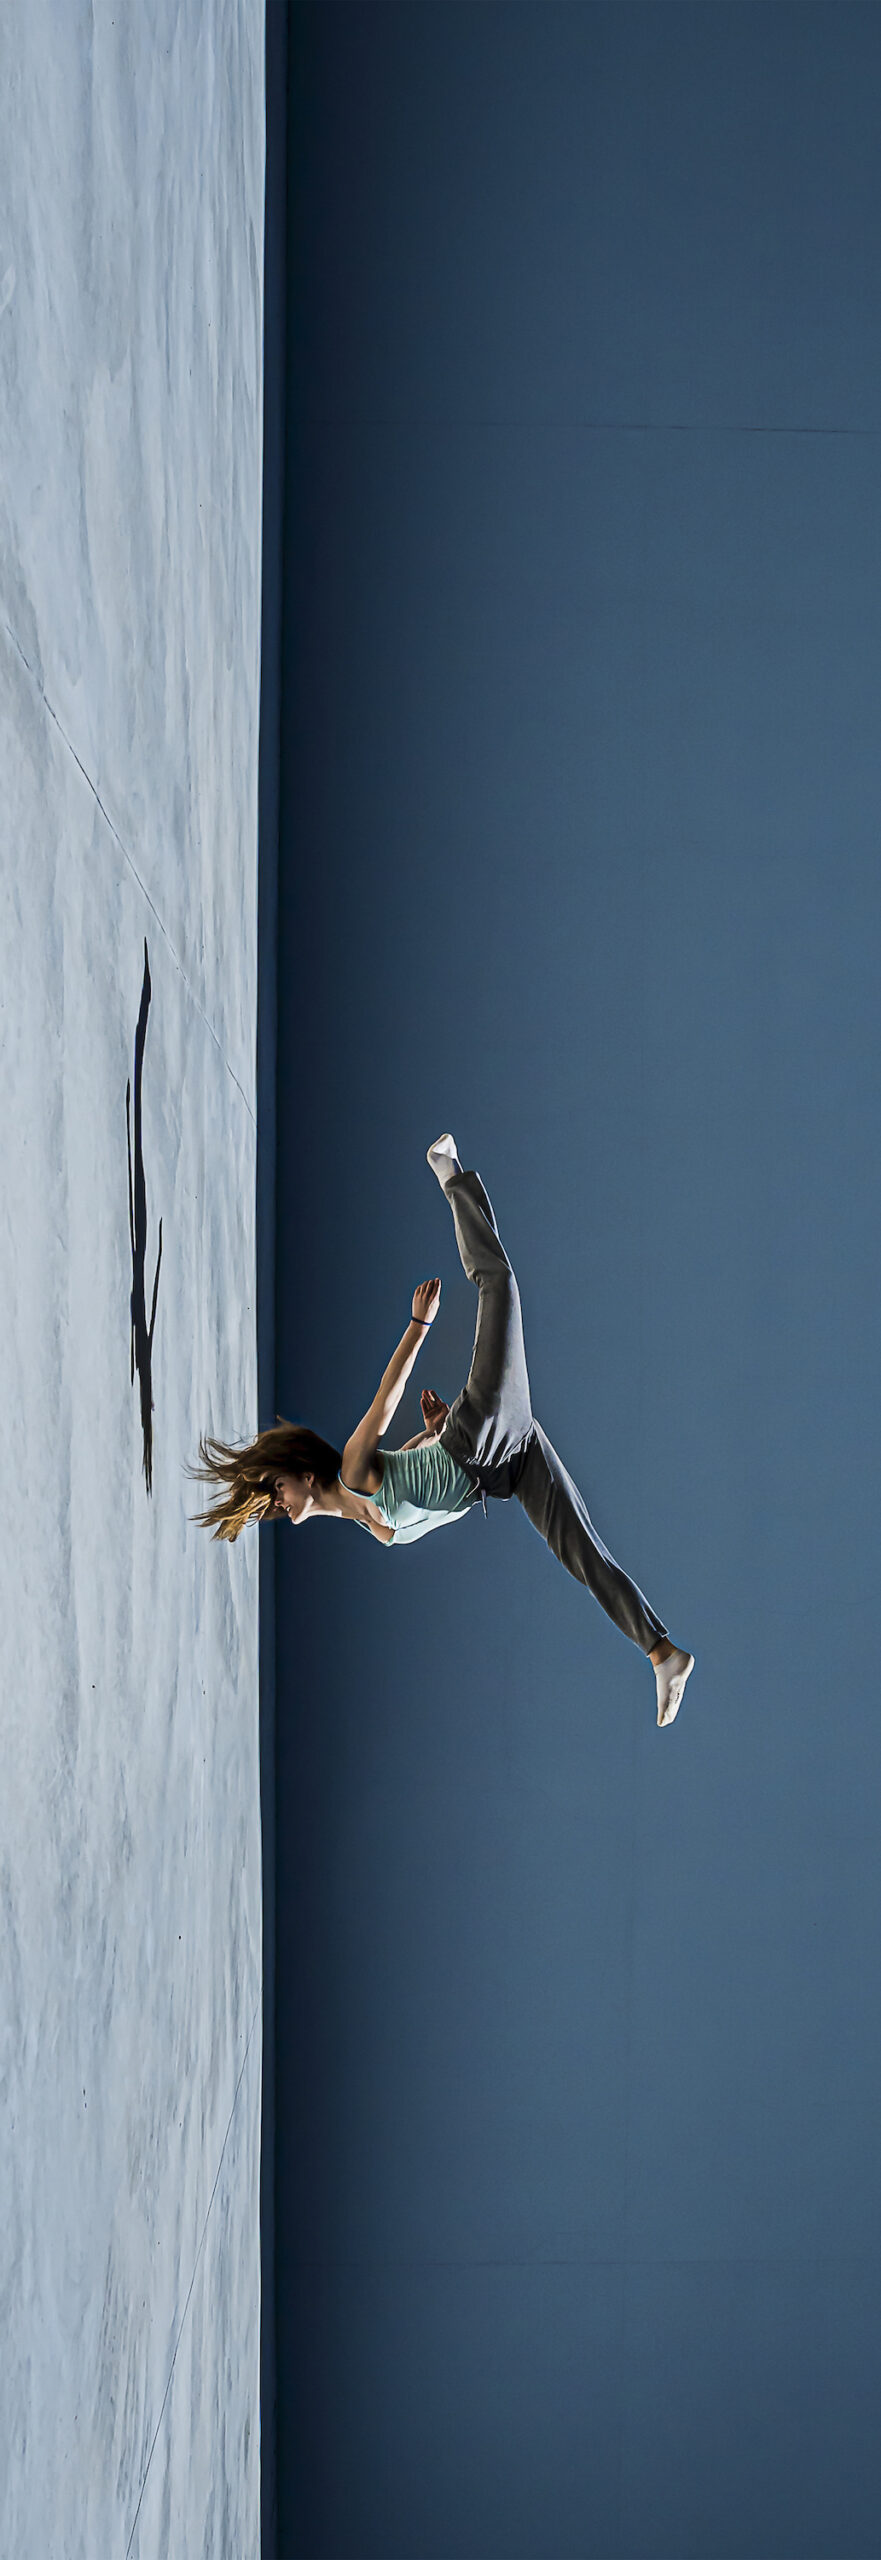 Gaby Merz photograph of acrobat Cira Cabasés at the FIRCO festival